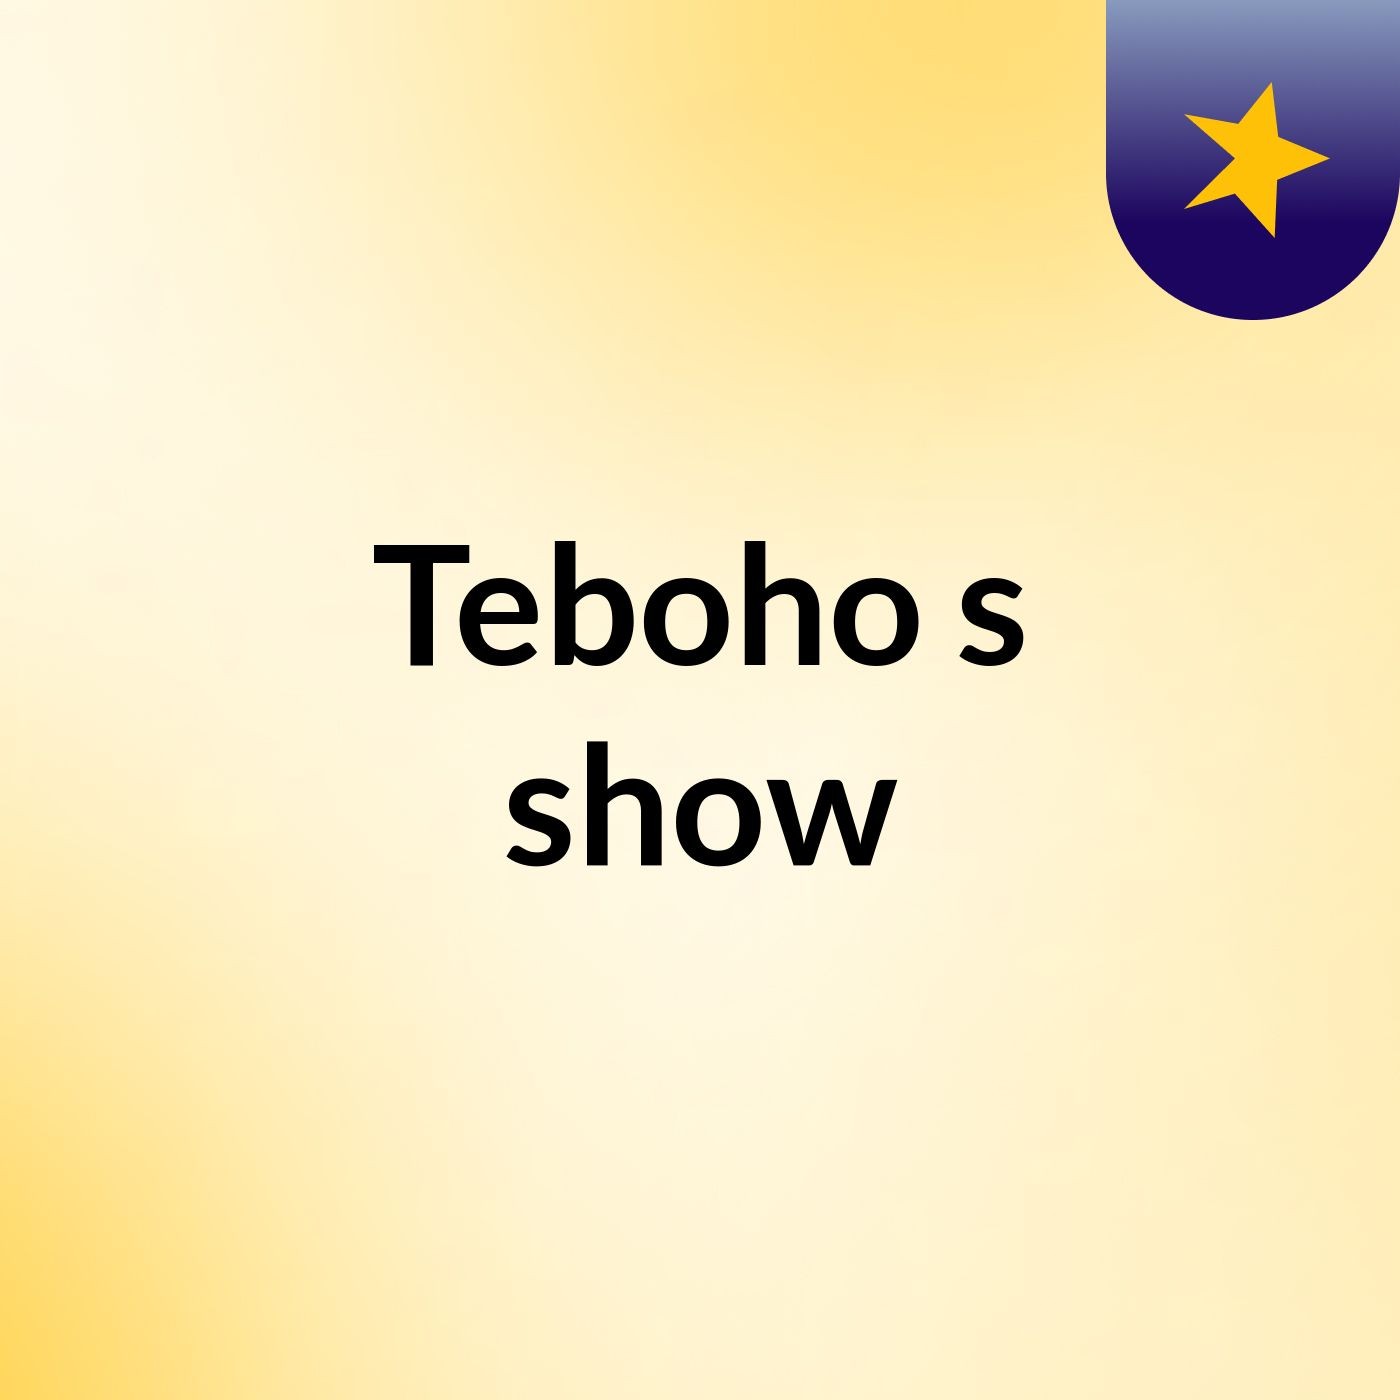 Teboho's show